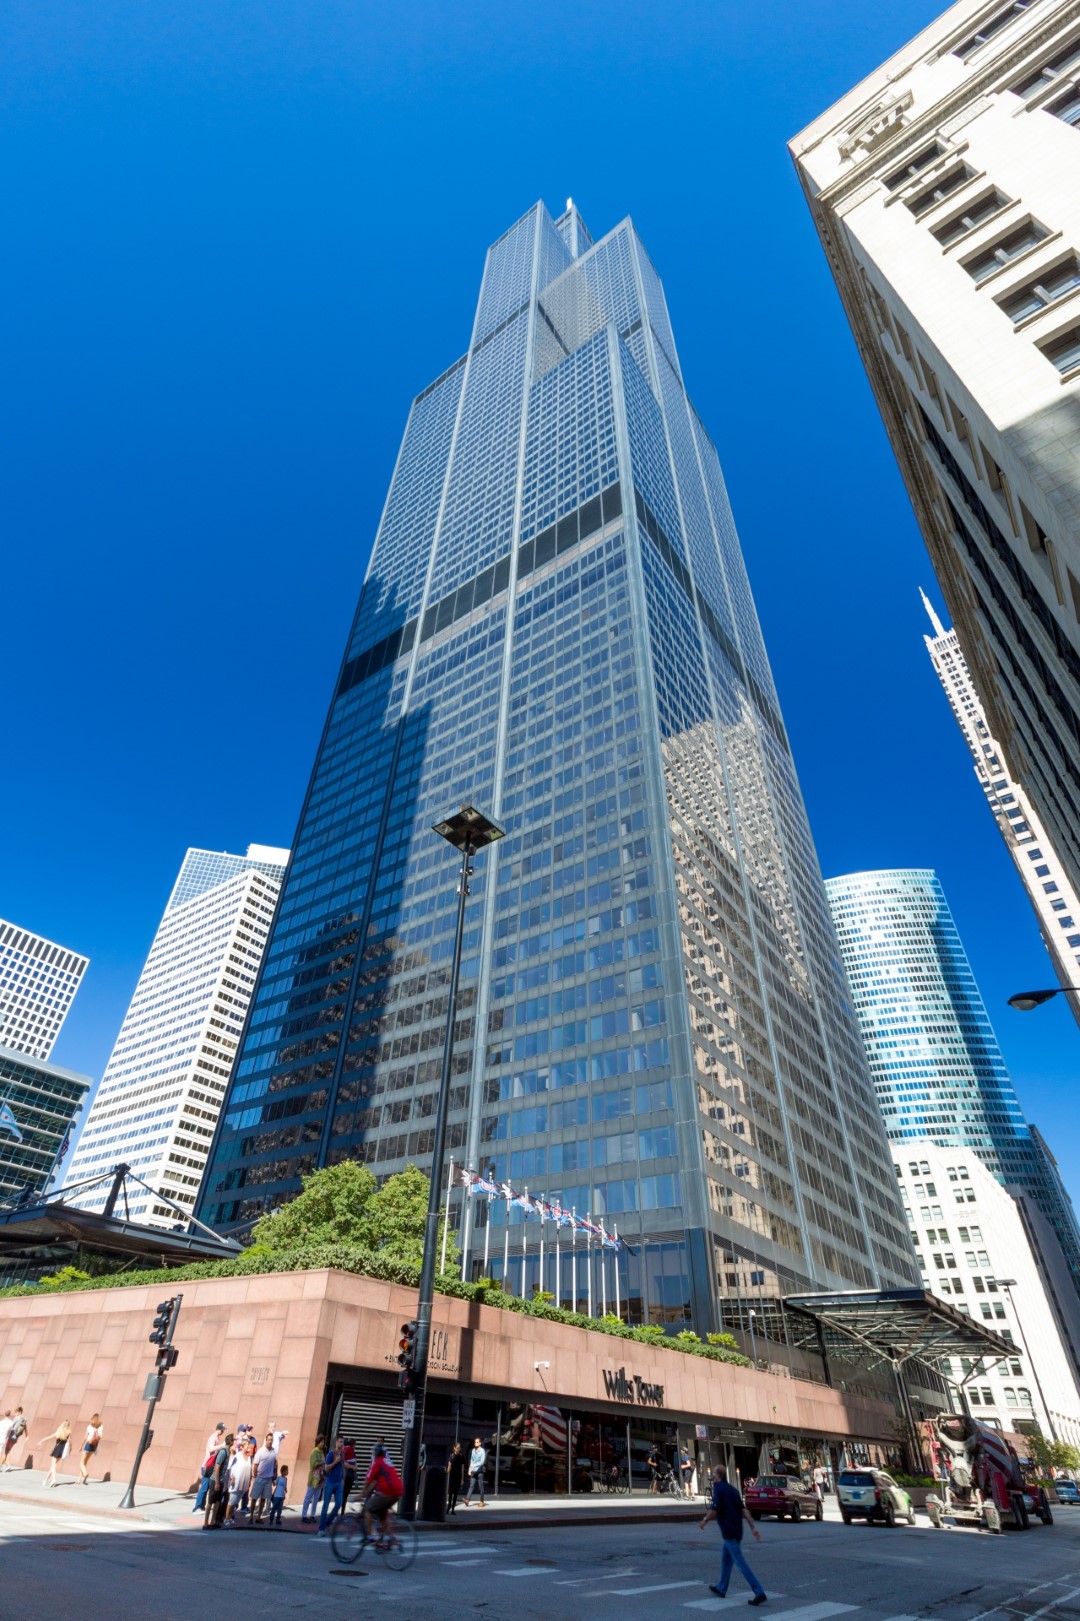 Chicago’s Willis Tower